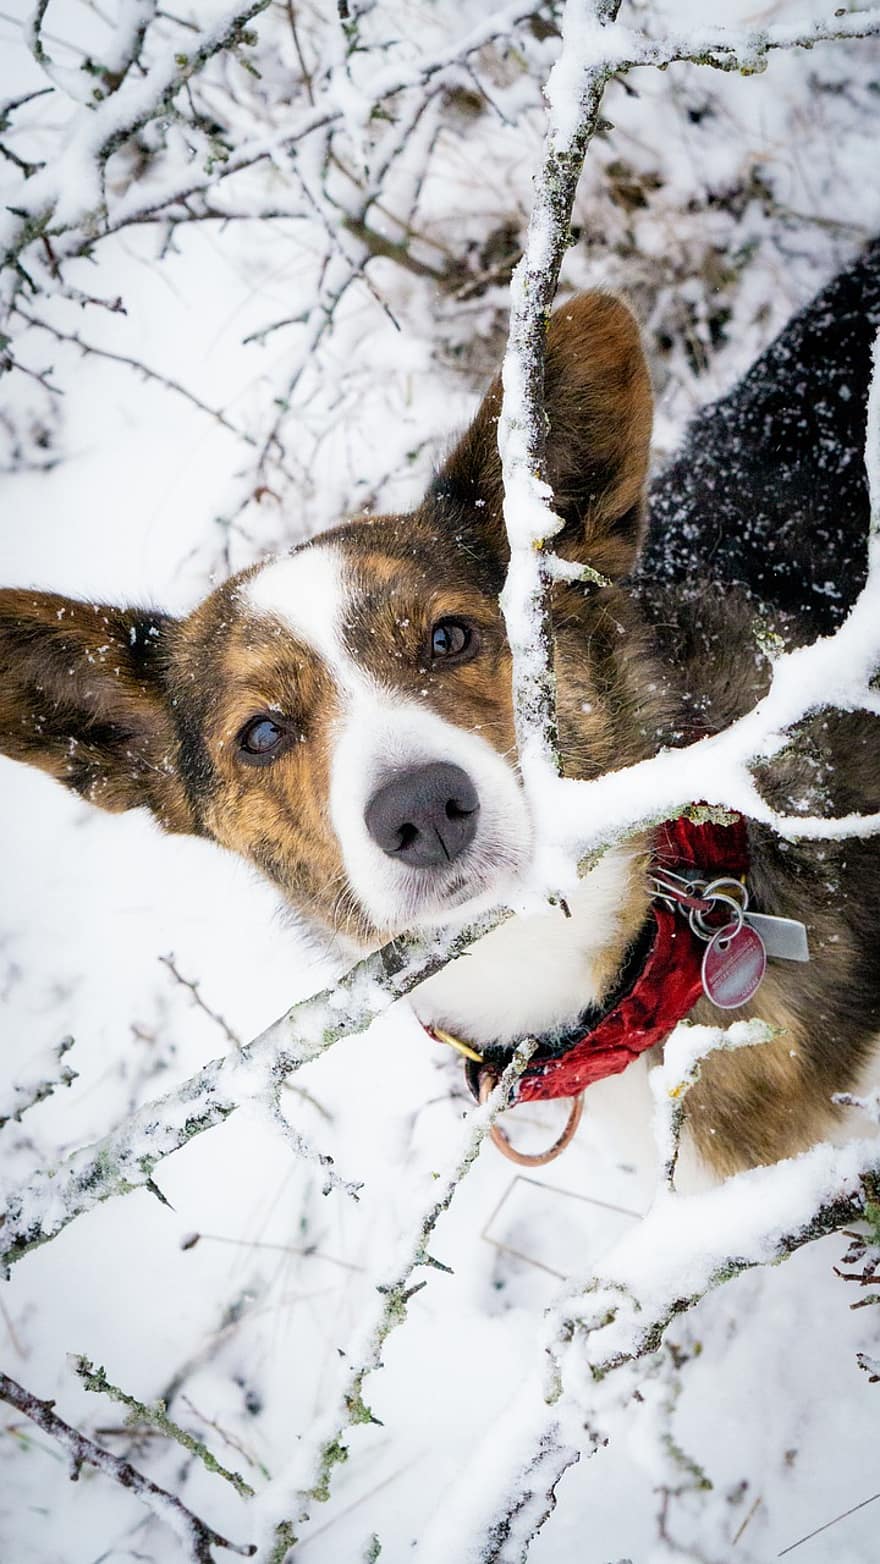 Corgi, Dog, Snow, Pembroke Welsh Corgi, Pet, Animal, Domestic Dog, Purebred Dog, Canine, Mammal, Cute